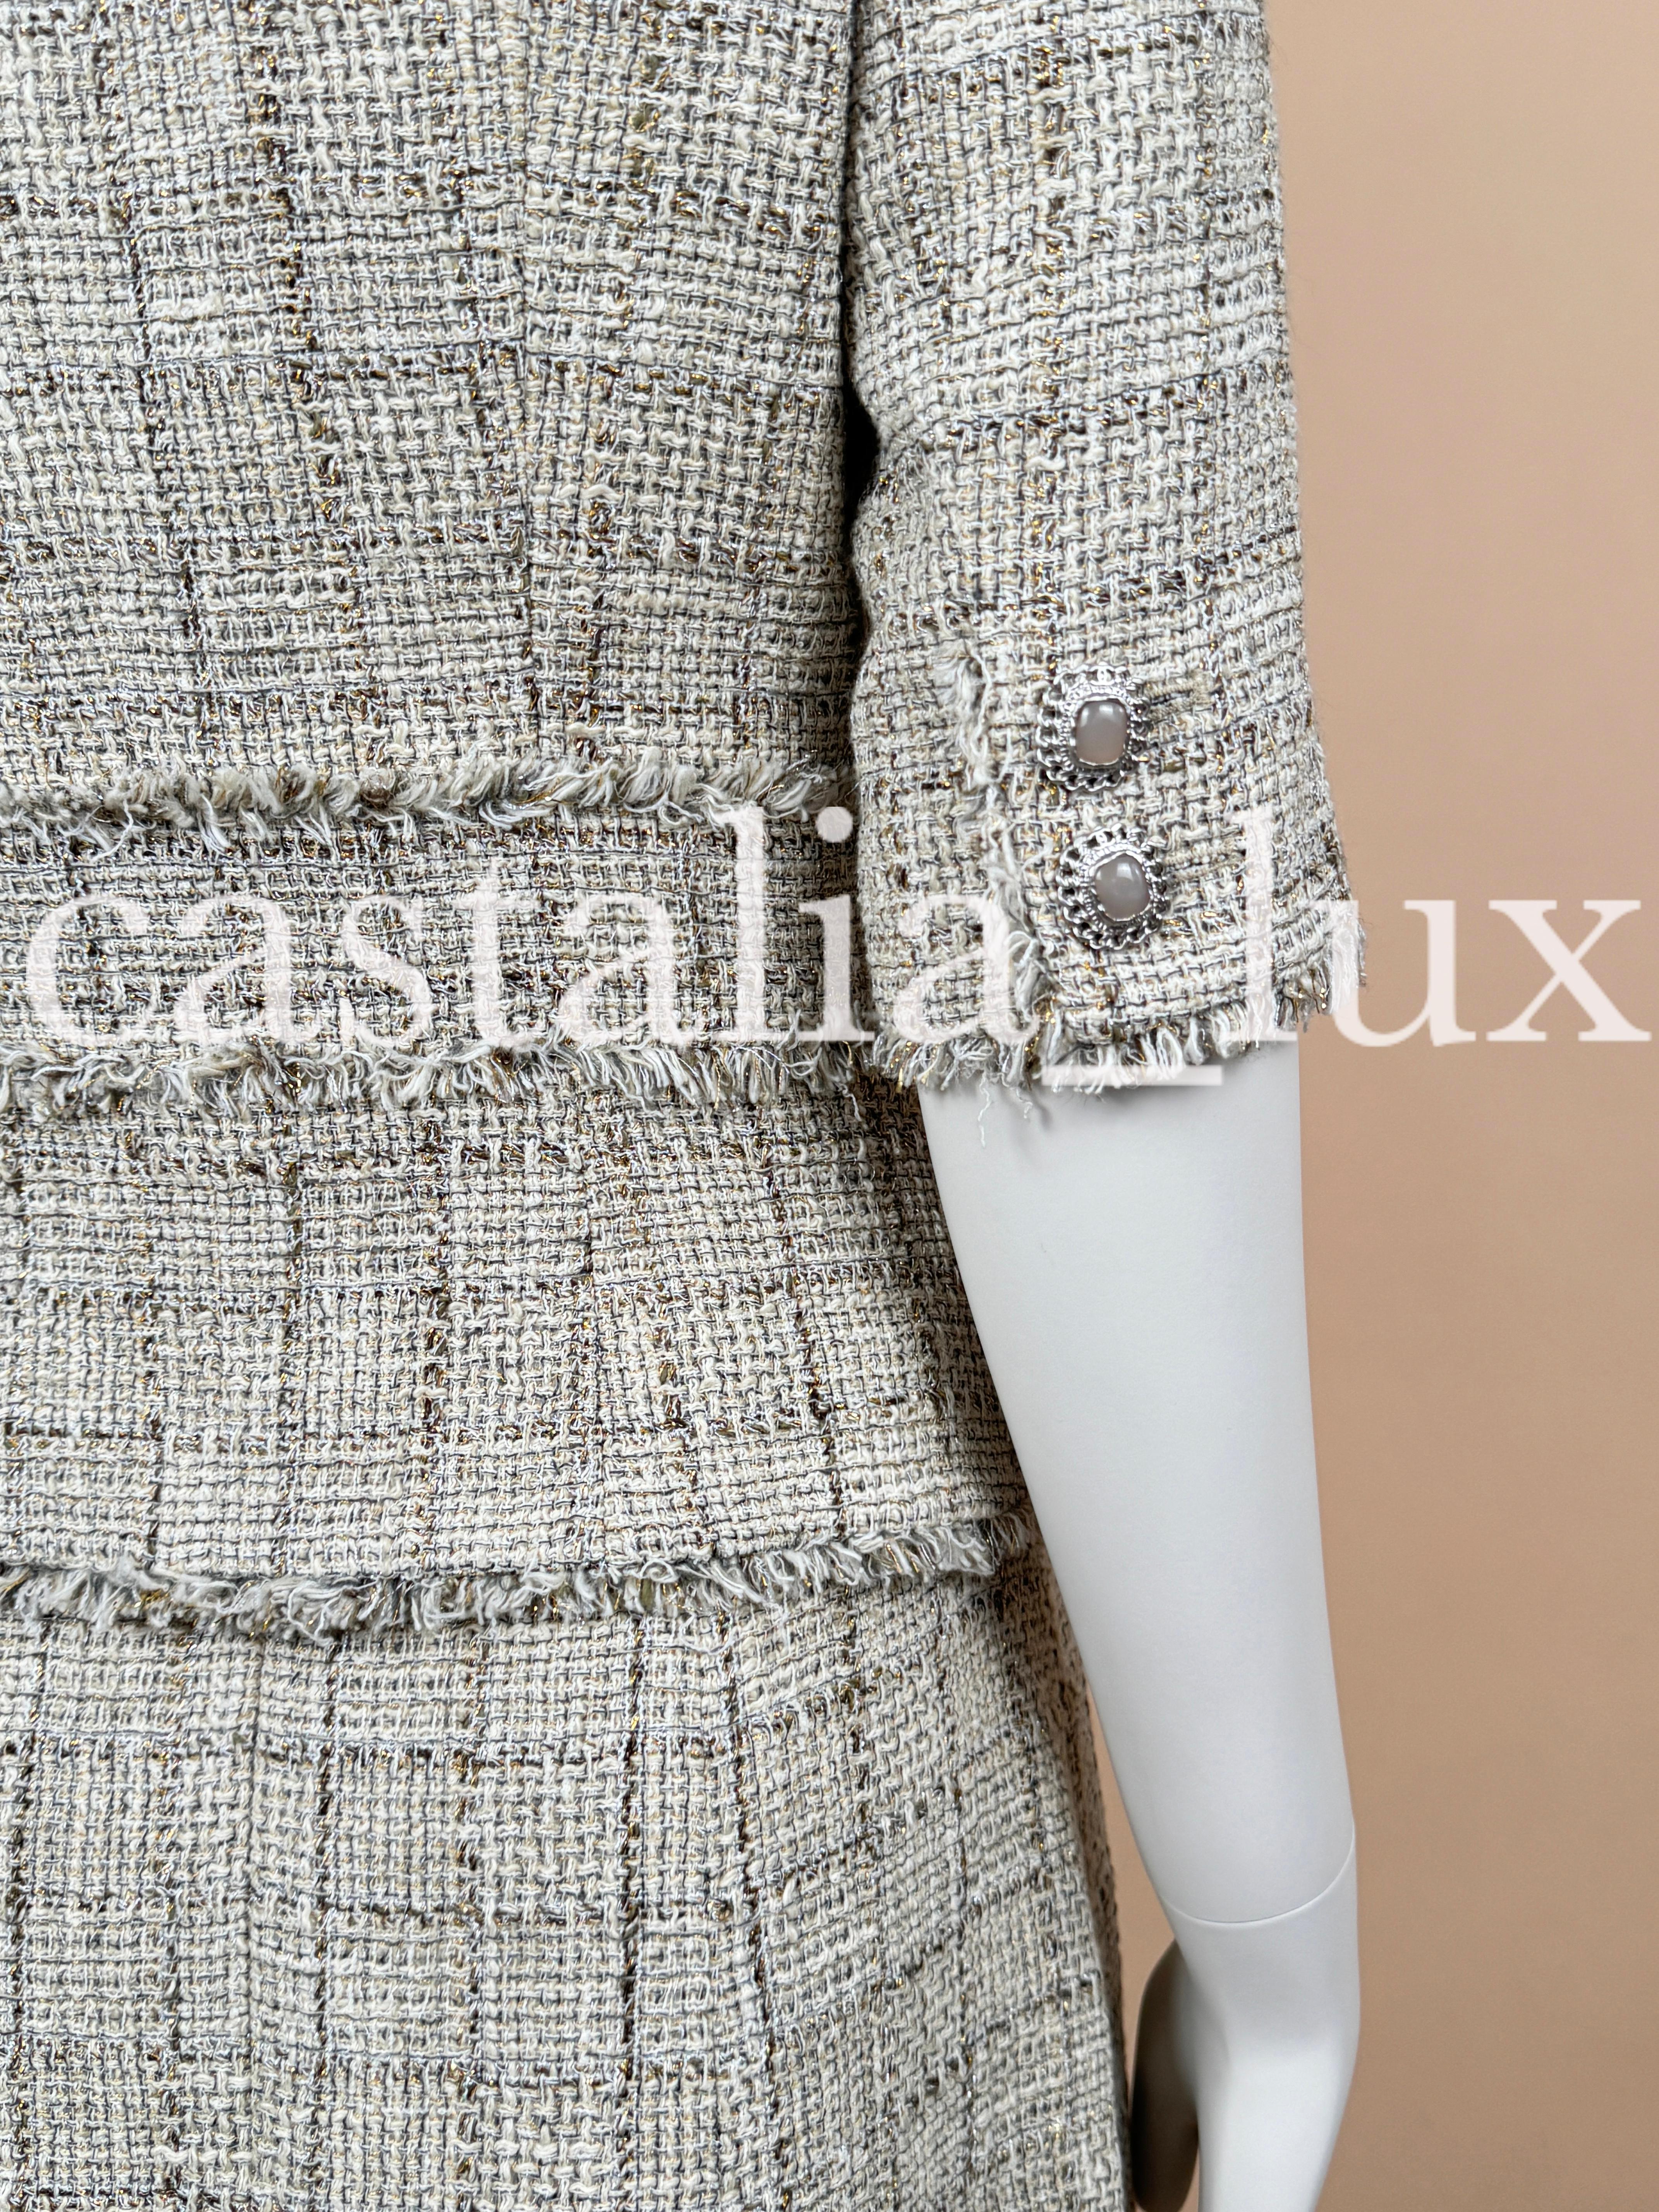 Chanel Gisele Bundchen Style Jewel Buttons Tweed Suit For Sale 10